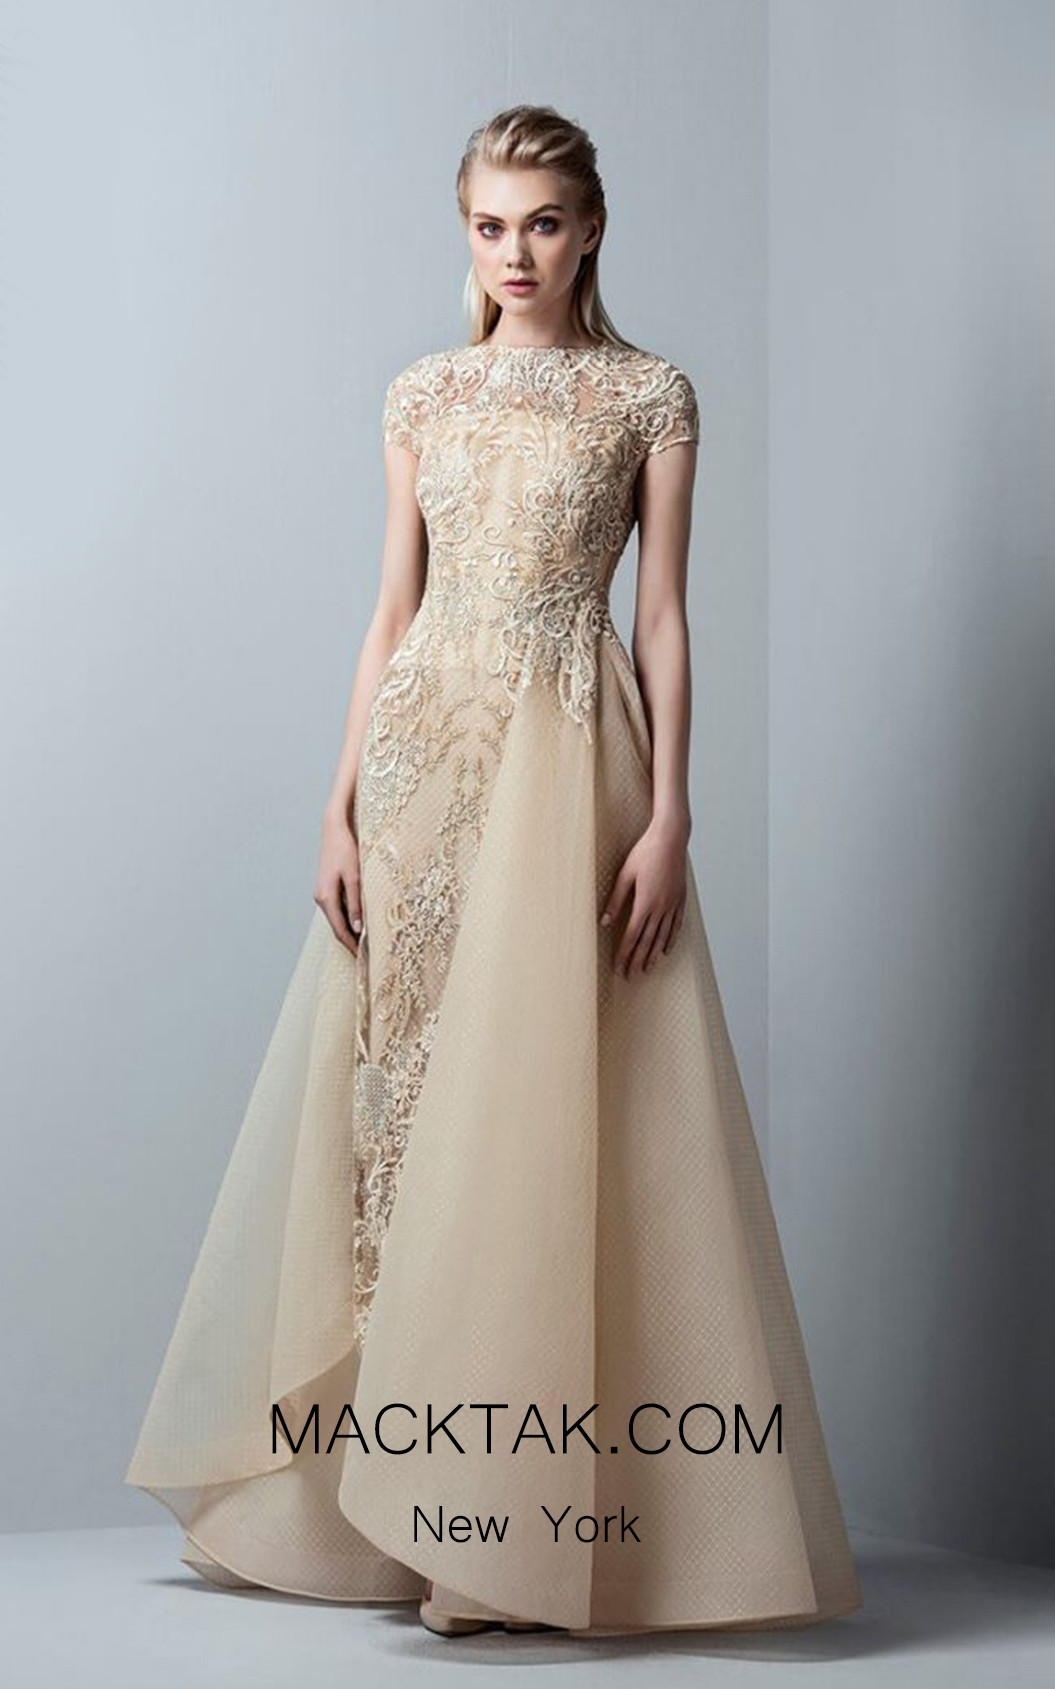 Saiid Kobeisy RE3360 Evening Dress - MackTak.com New York Online Store